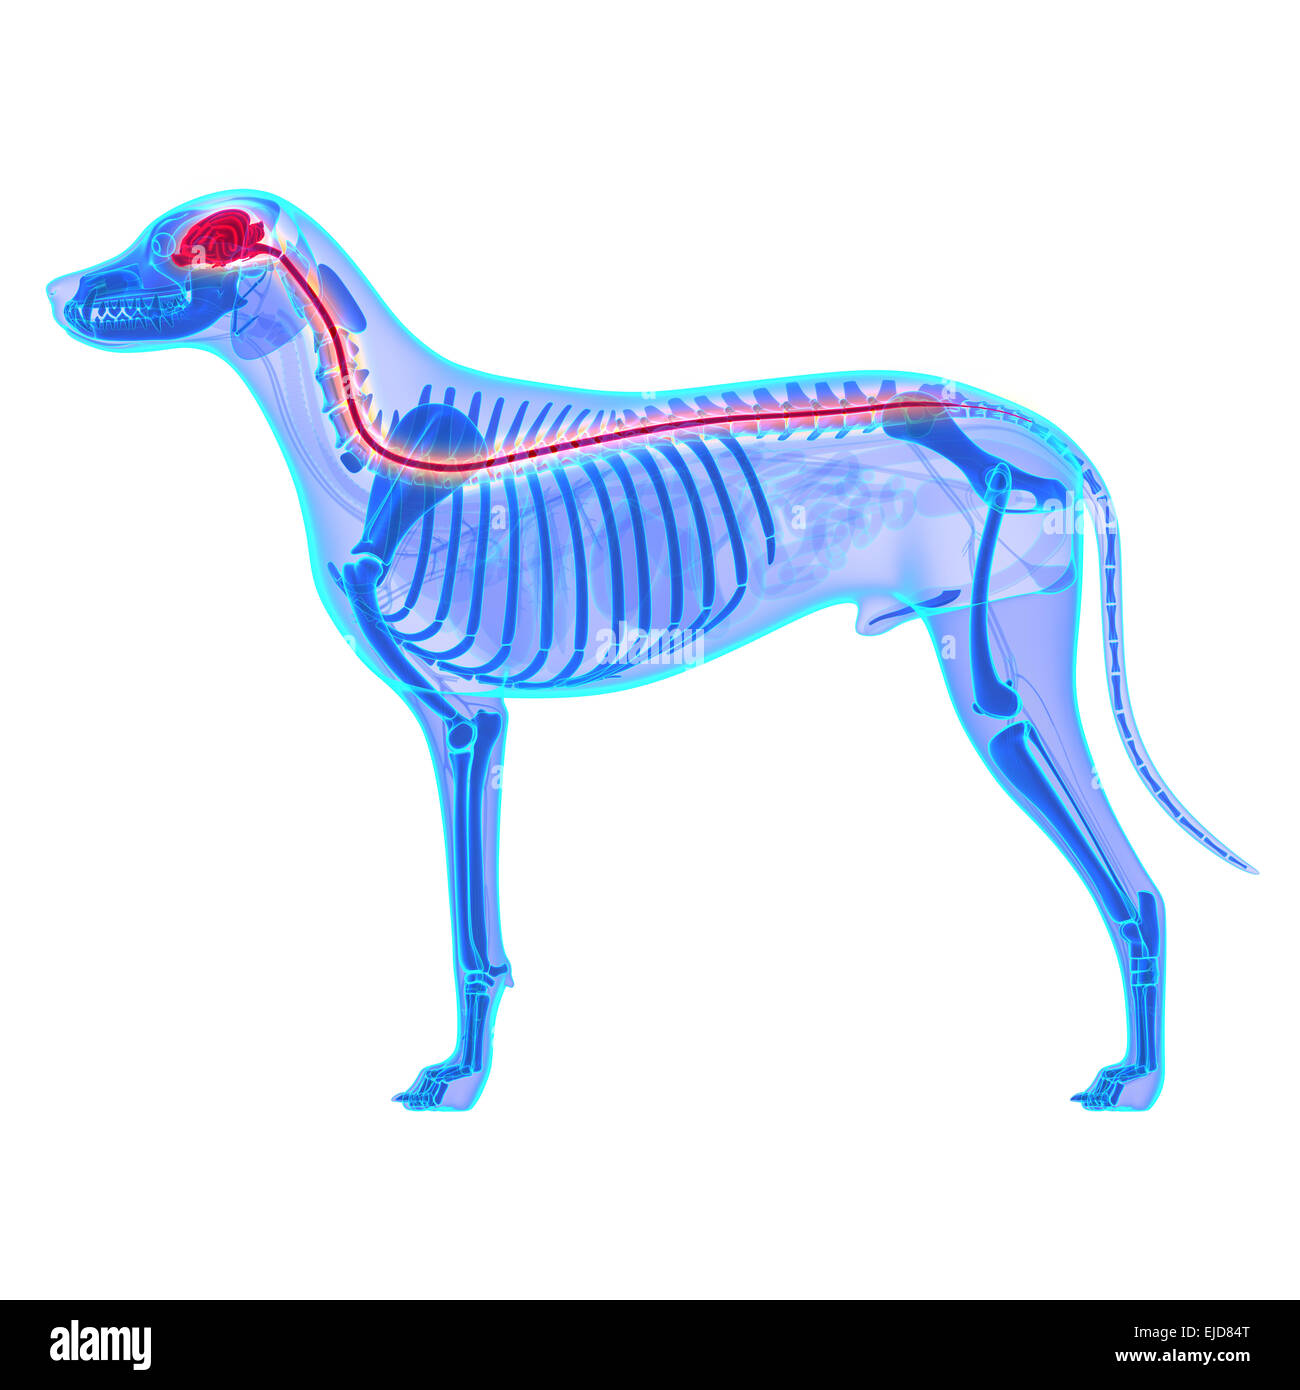 Hund-Nervensystem - Canis Lupus Familiaris Anatomie - isoliert auf weiss  Stockfotografie - Alamy